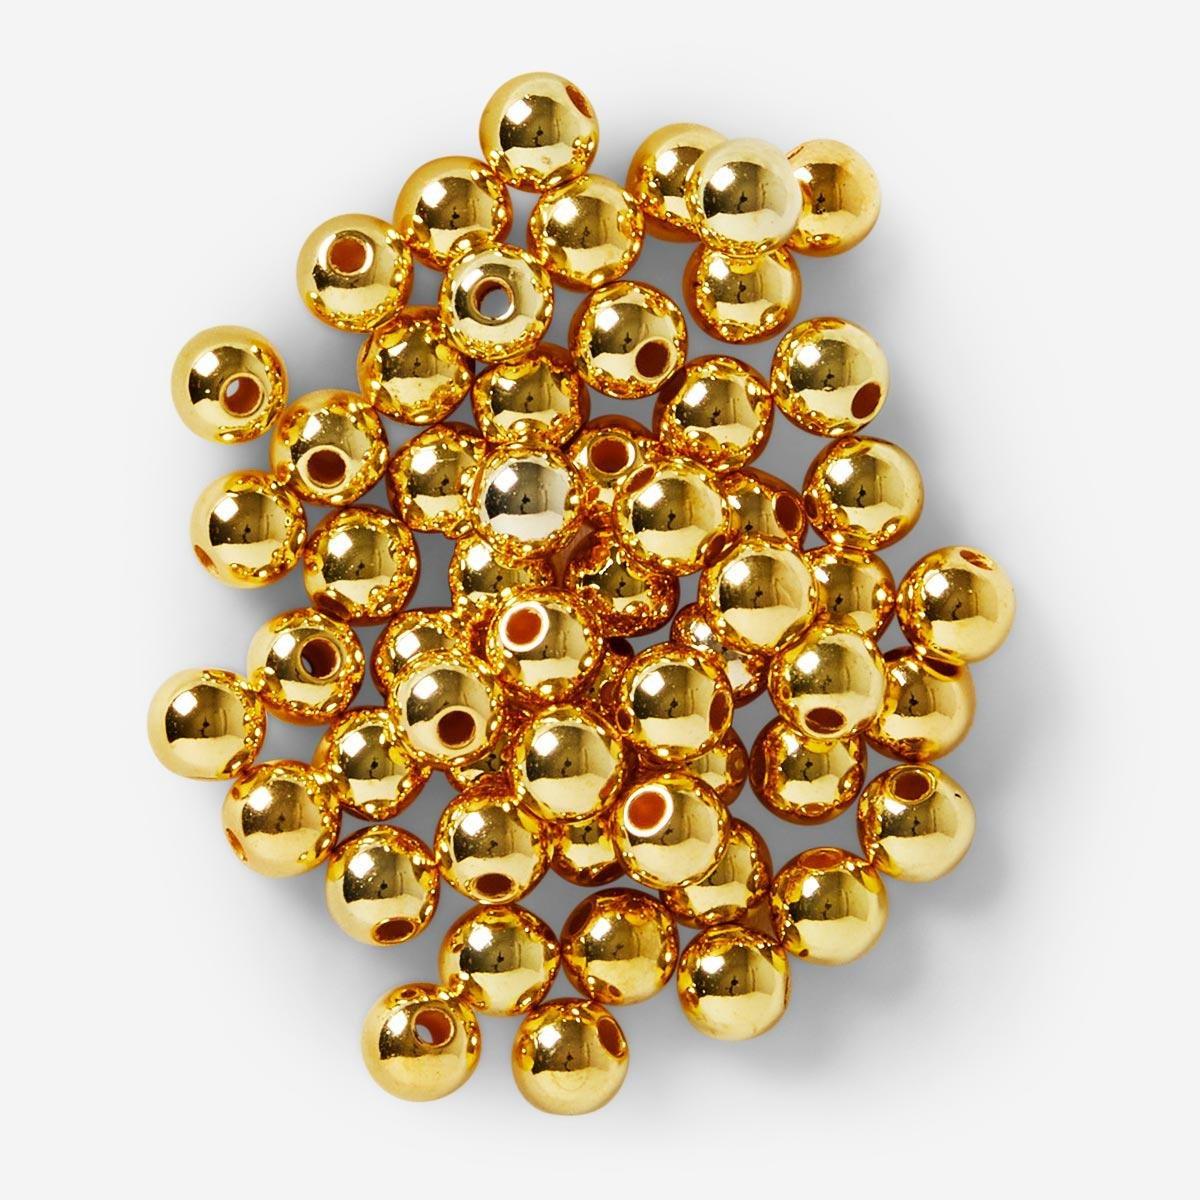 Gold plastic beads